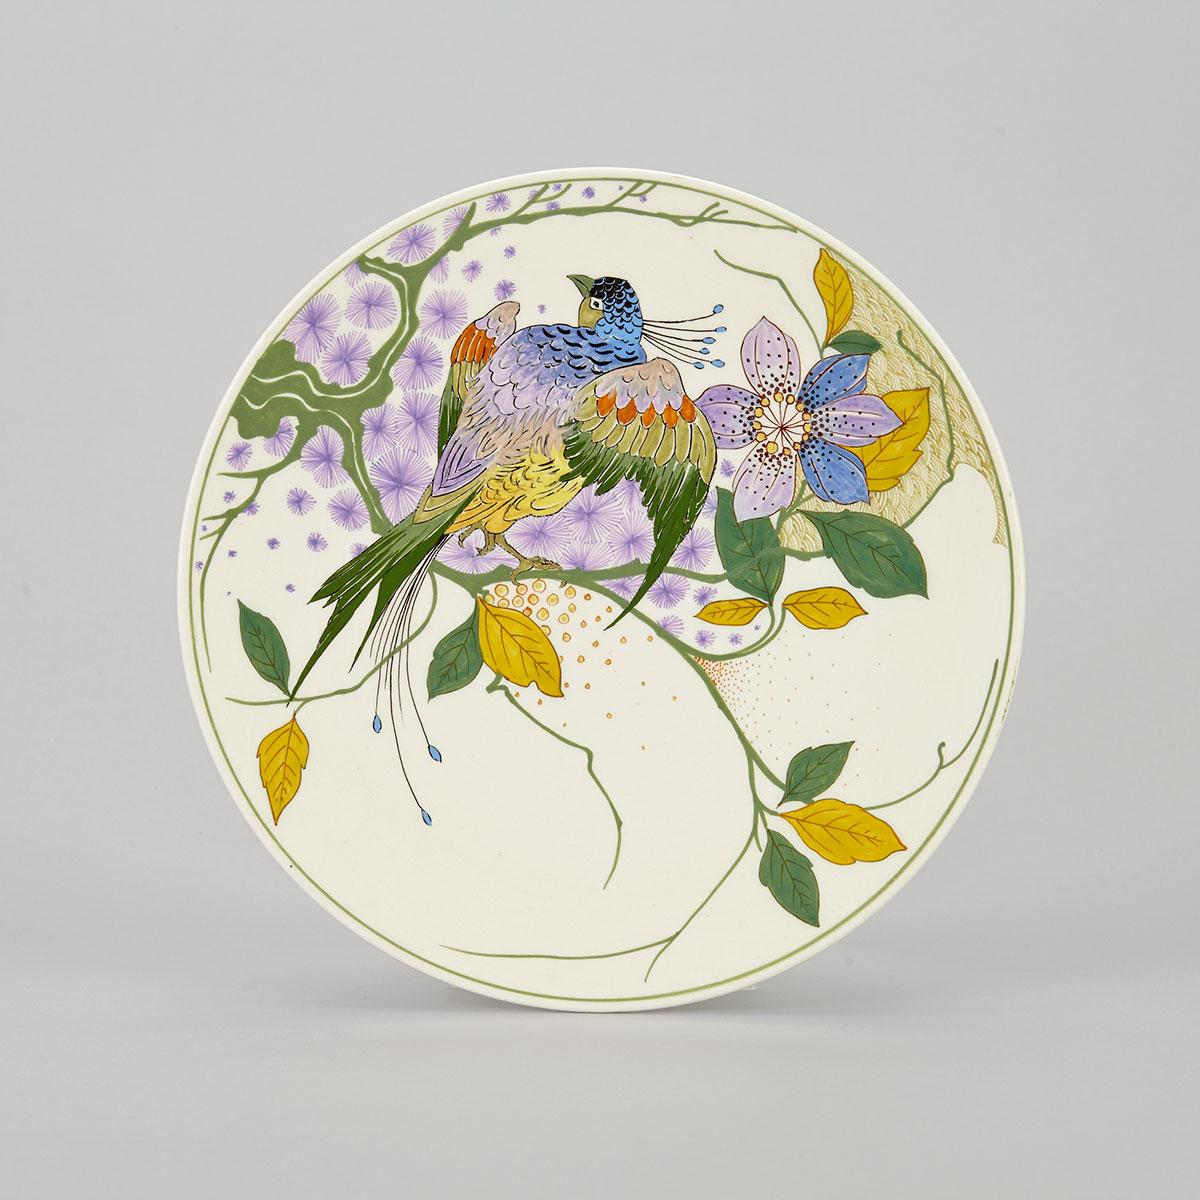 Zuid Holland Gouda ‘Bird of Paradise’ Plate, early 20th century